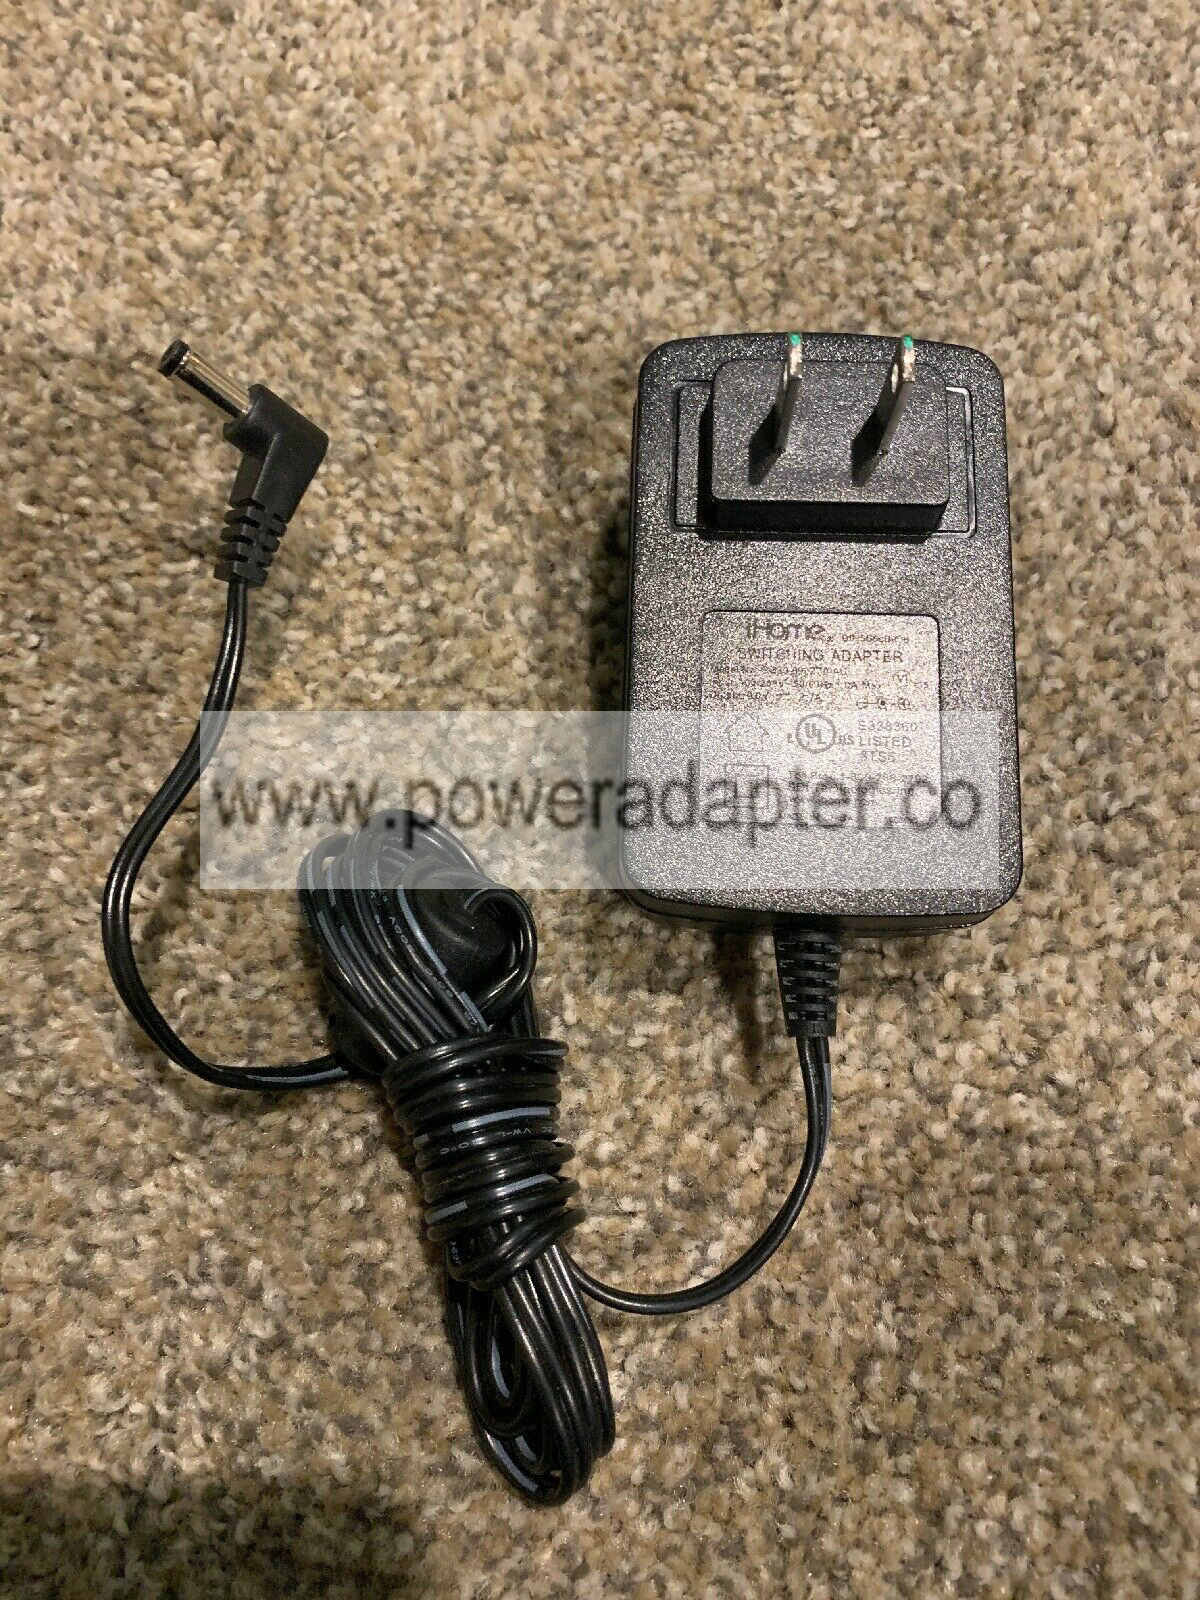 iHome Genuine Switching Adapter Cord Power Supply, GQ30-090270-AU, Black Brand: iHome MPN: GQ30-090270-AU iHome Ge